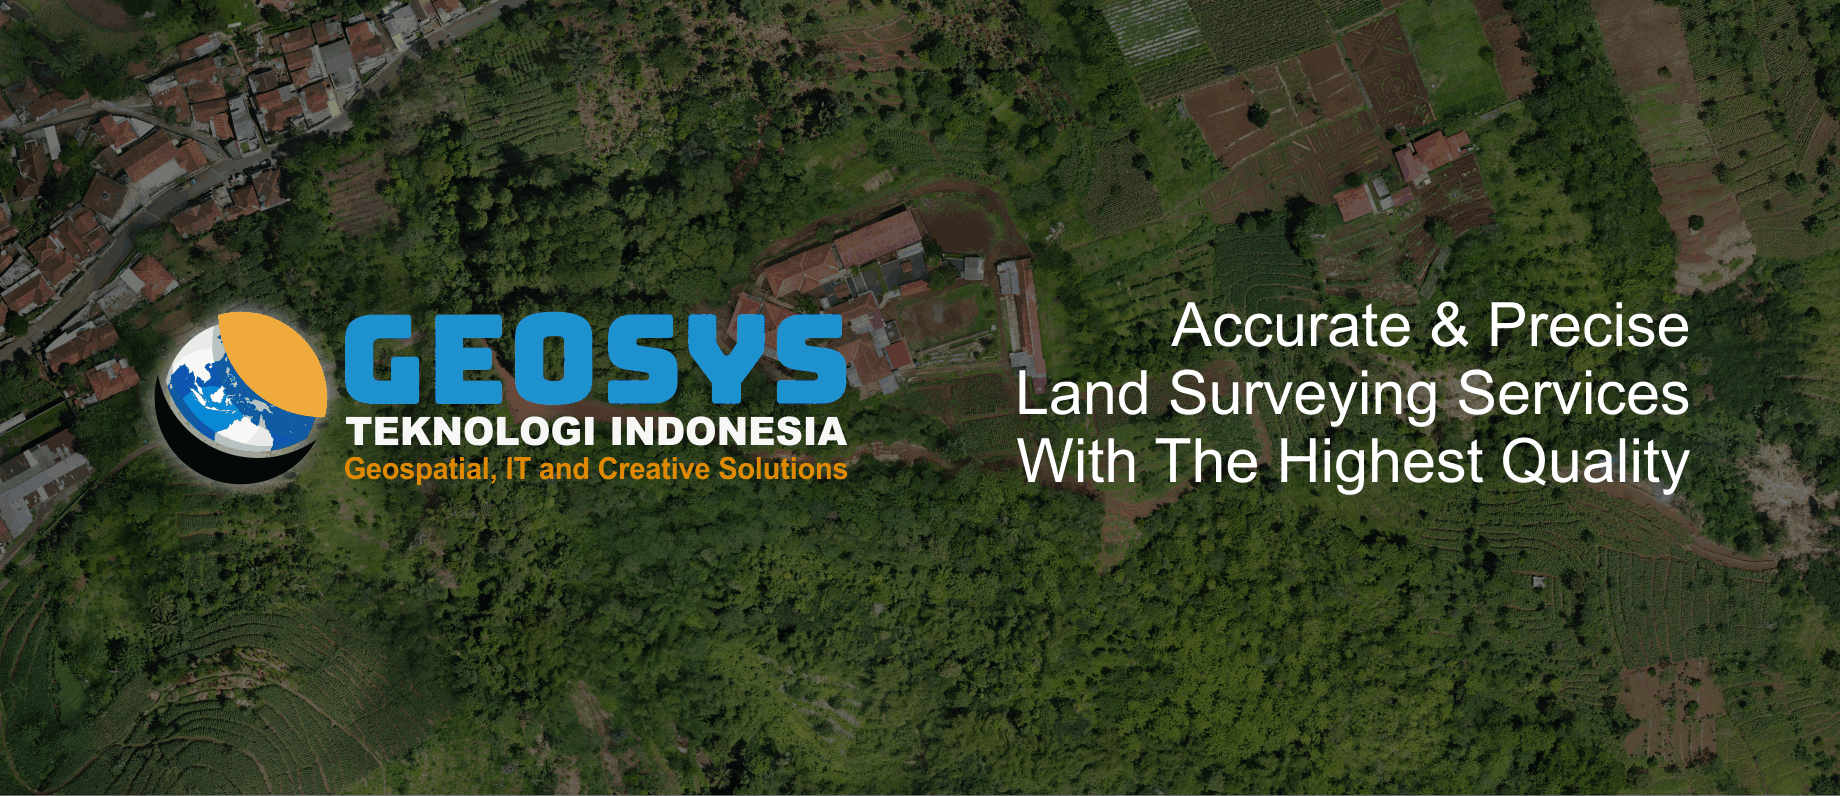 Geosys Teknologi Indonesia